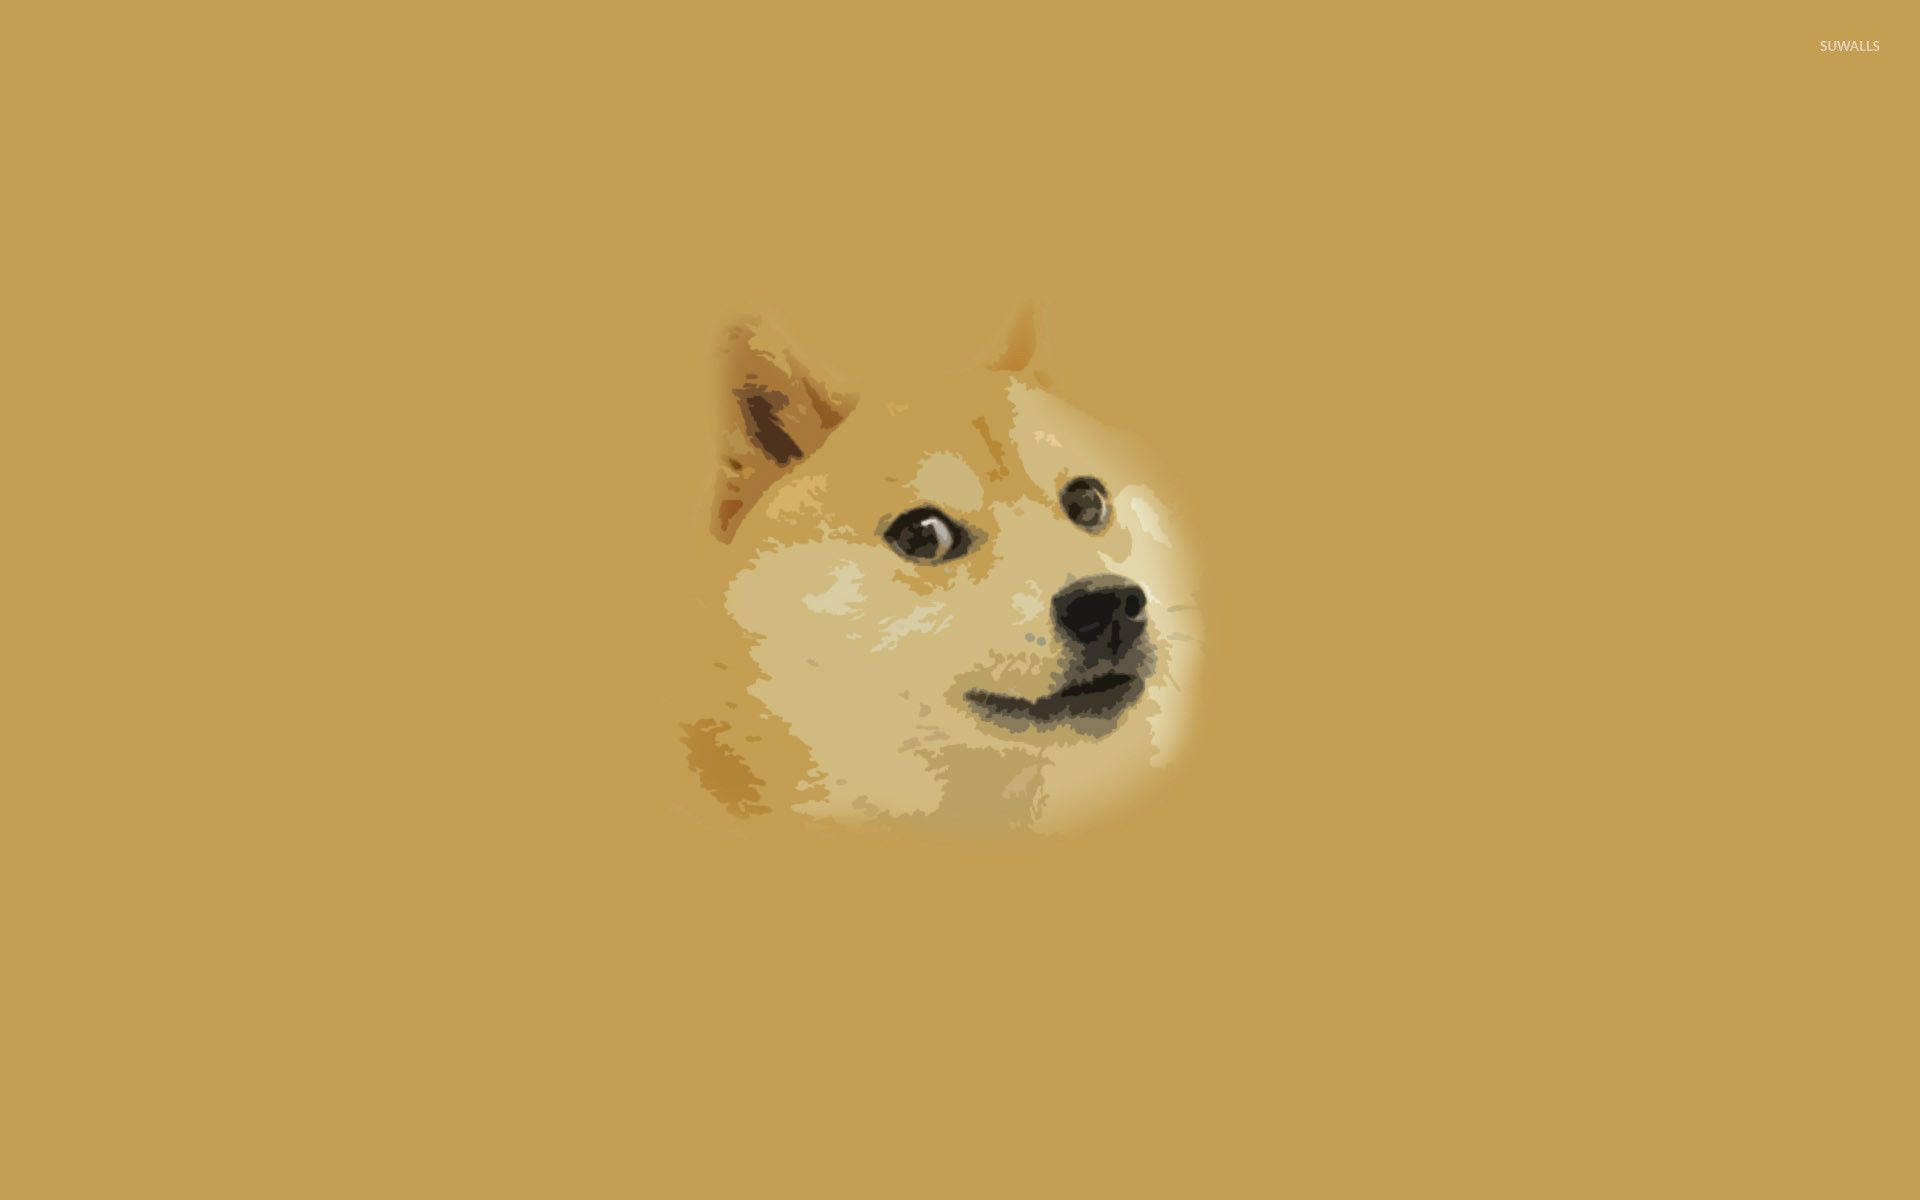 Painted doge dog dank meme wallpaper.